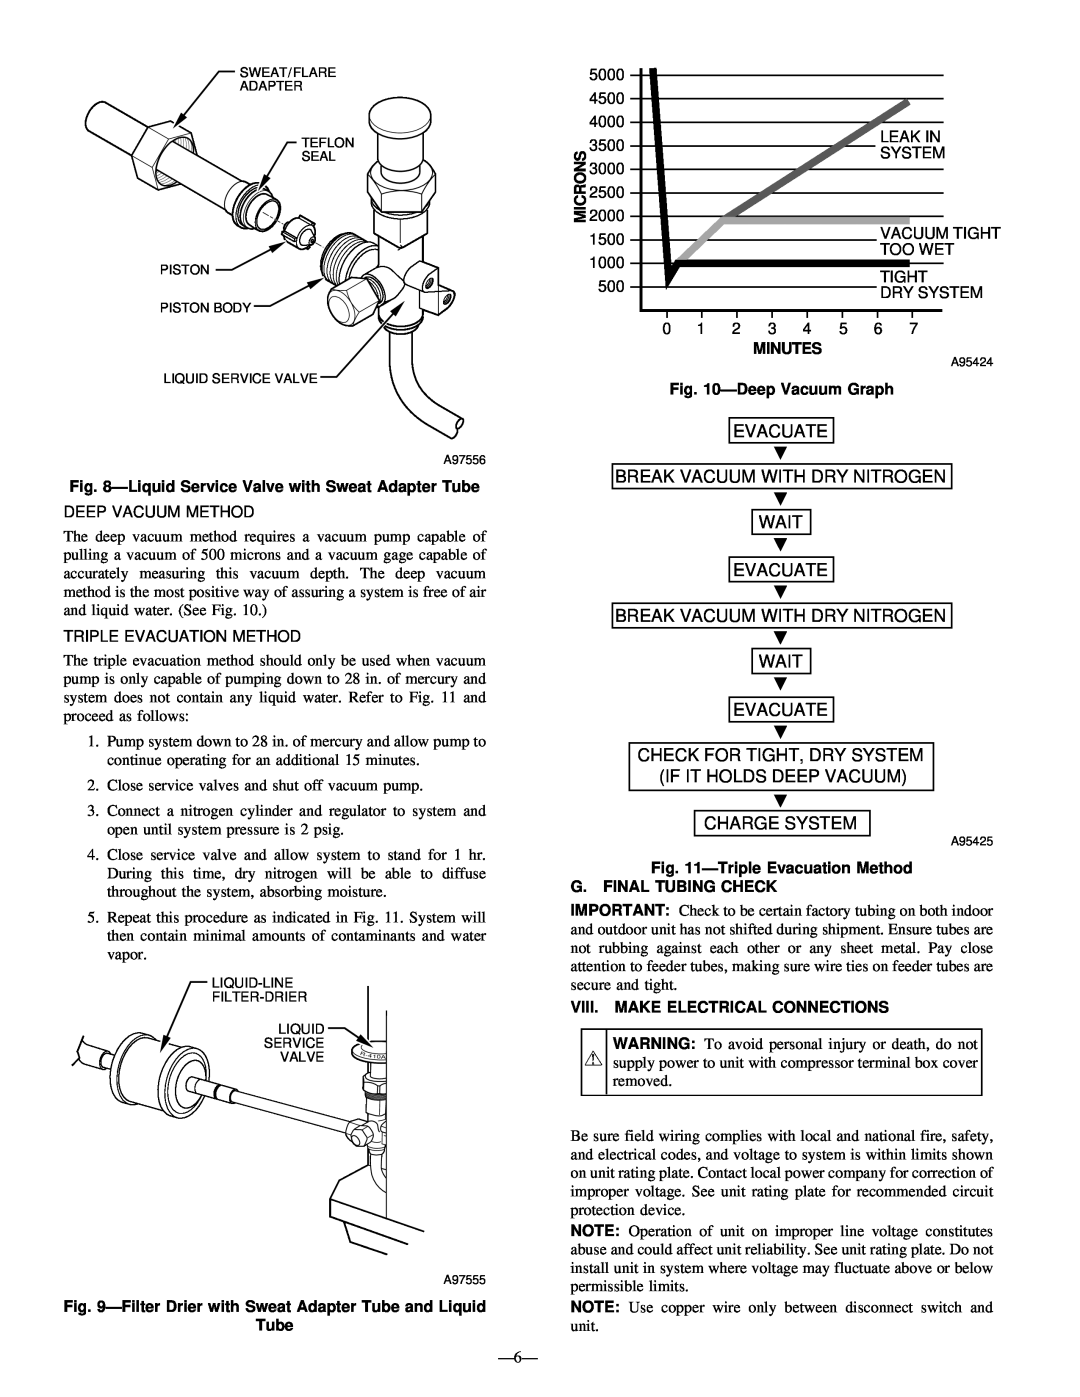 Bryant 698B instruction manual Evacuate Break Vacuum With Dry Nitrogen Wait, Charge System, Tube, Minutes, DeepVacuum Graph 